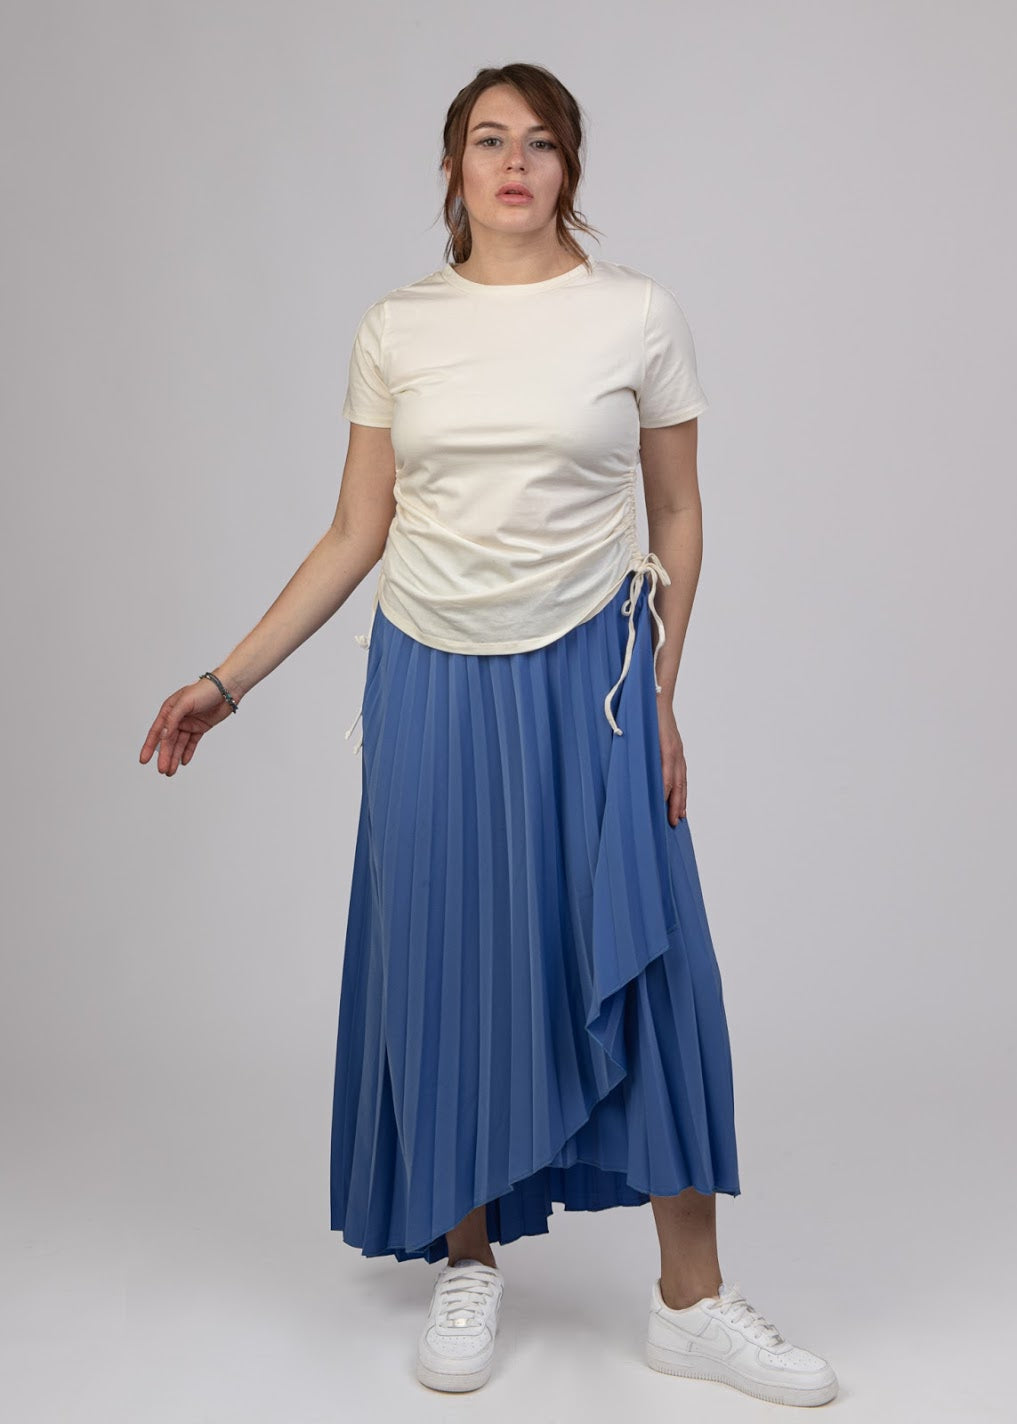 Plisse Crepe Skirt- SCS2151